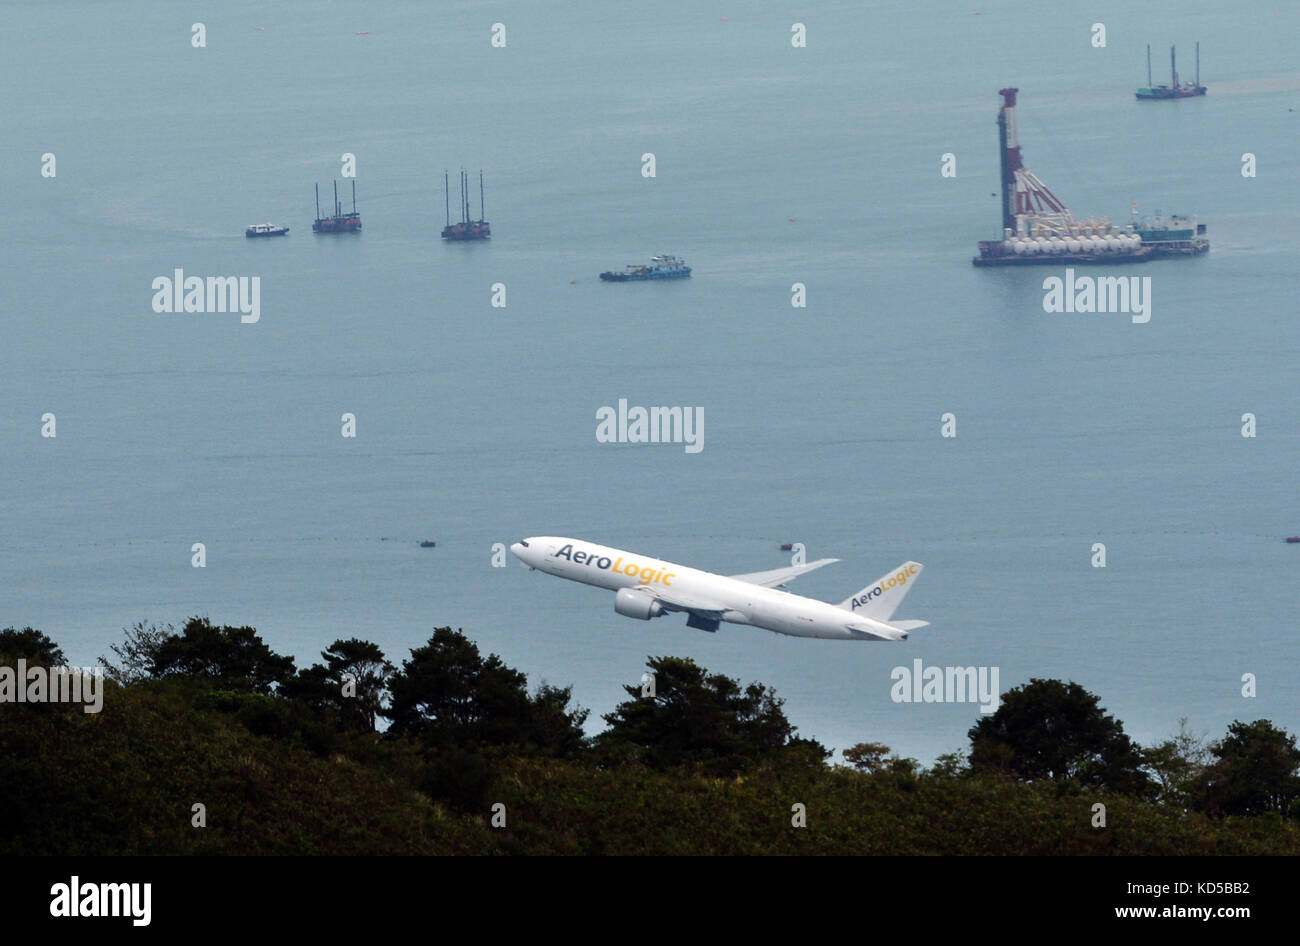 Aero Logic takeoff from Hong Kong international airport. Stock Photo